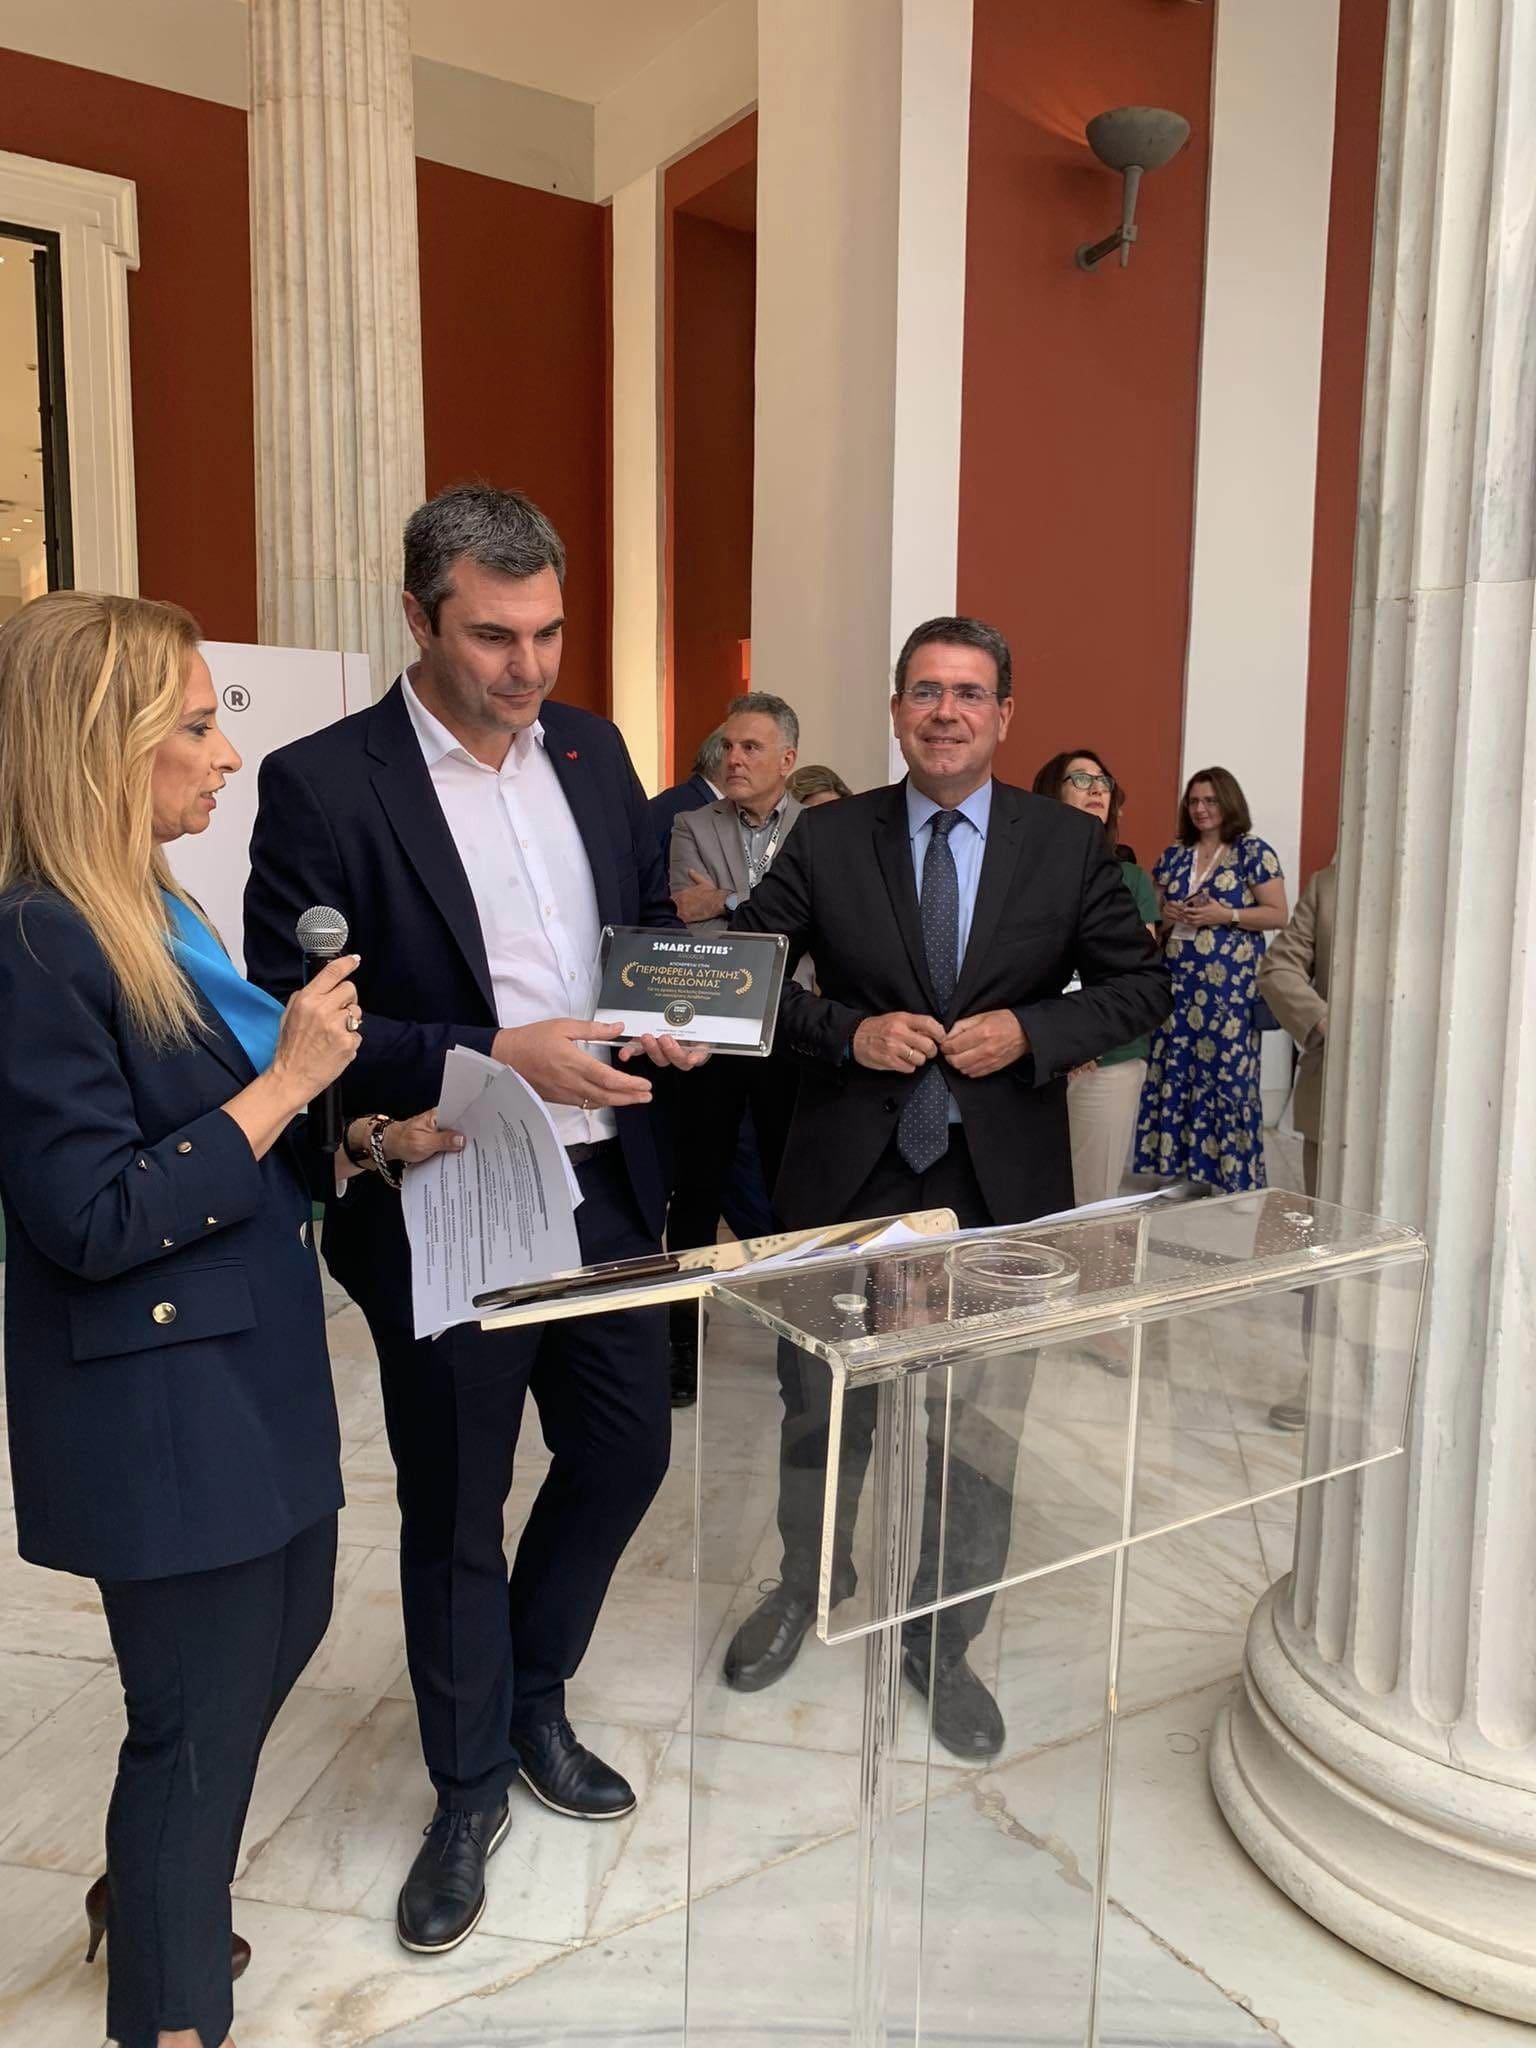 Eordaialive.com - Τα Νέα της Πτολεμαΐδας, Εορδαίας, Κοζάνης Πραγματοποιήθηκε στο Ζάππειο Μέγαρο στην Αθήνα η 1η Έκθεση «Smart Cities 2023» στην οποία συμμετείχε η Περιφέρεια Δυτικής Μακεδονίας